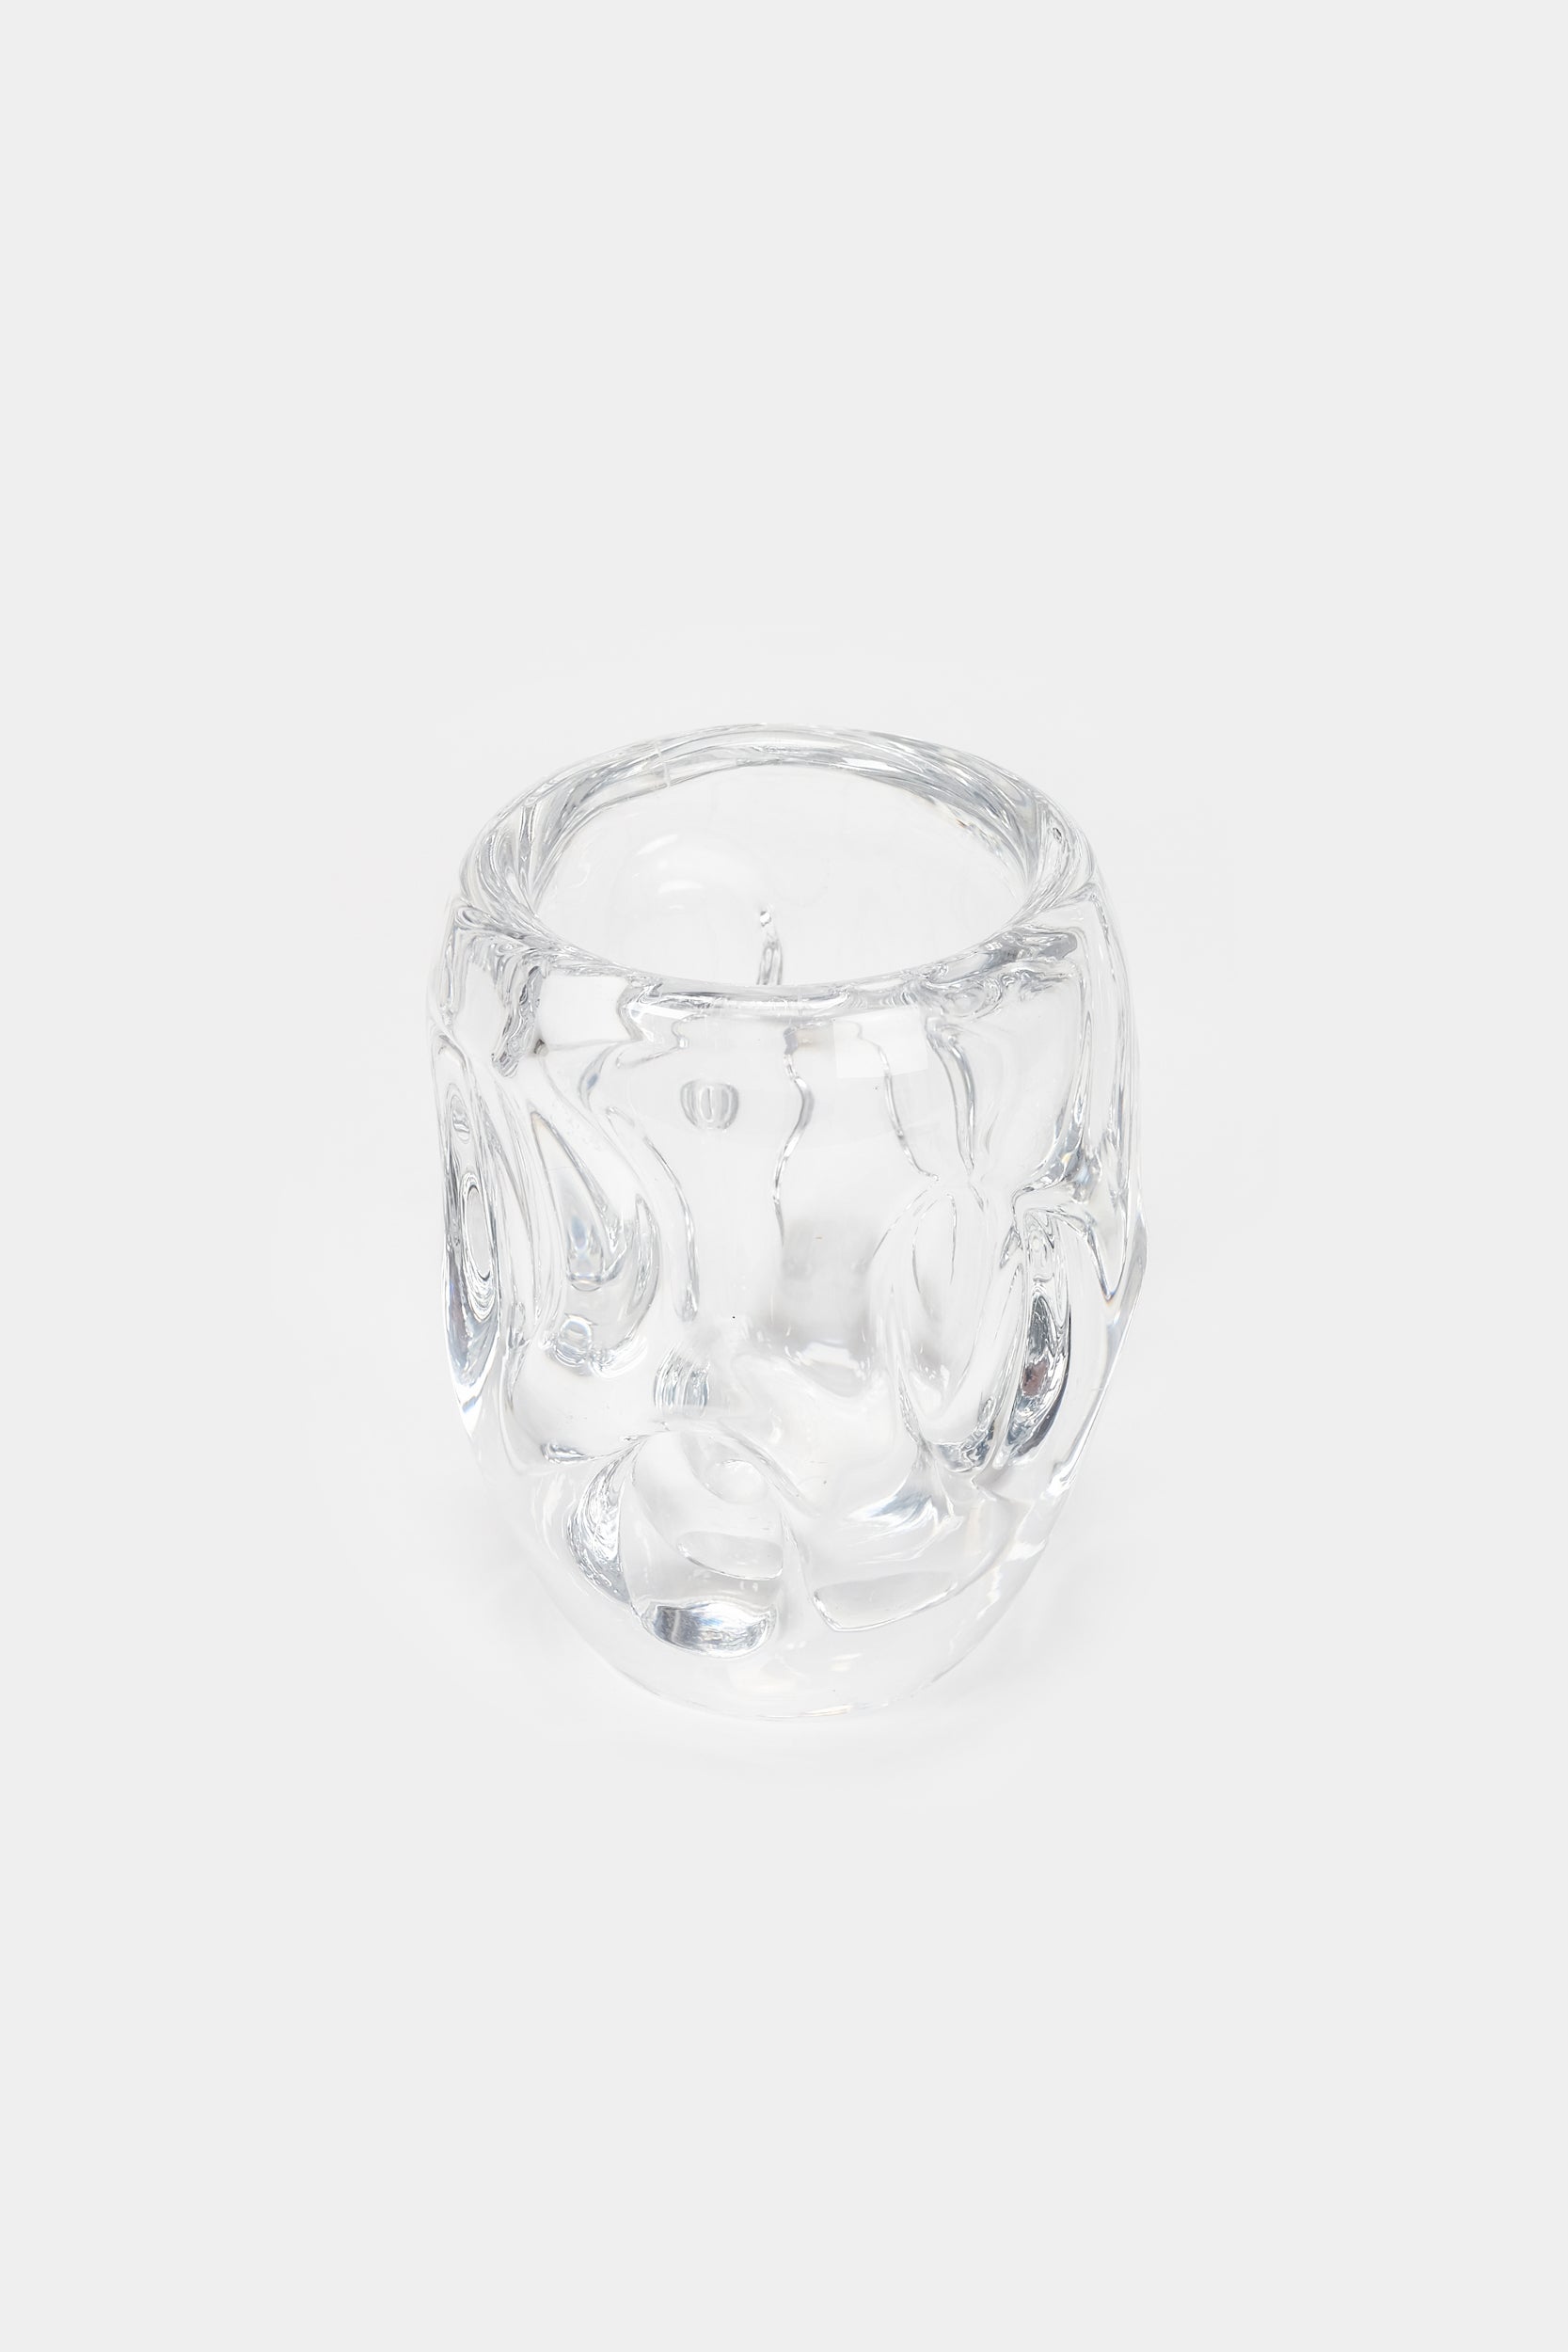 Kristallglas Vase, Sèvres, Frankreich